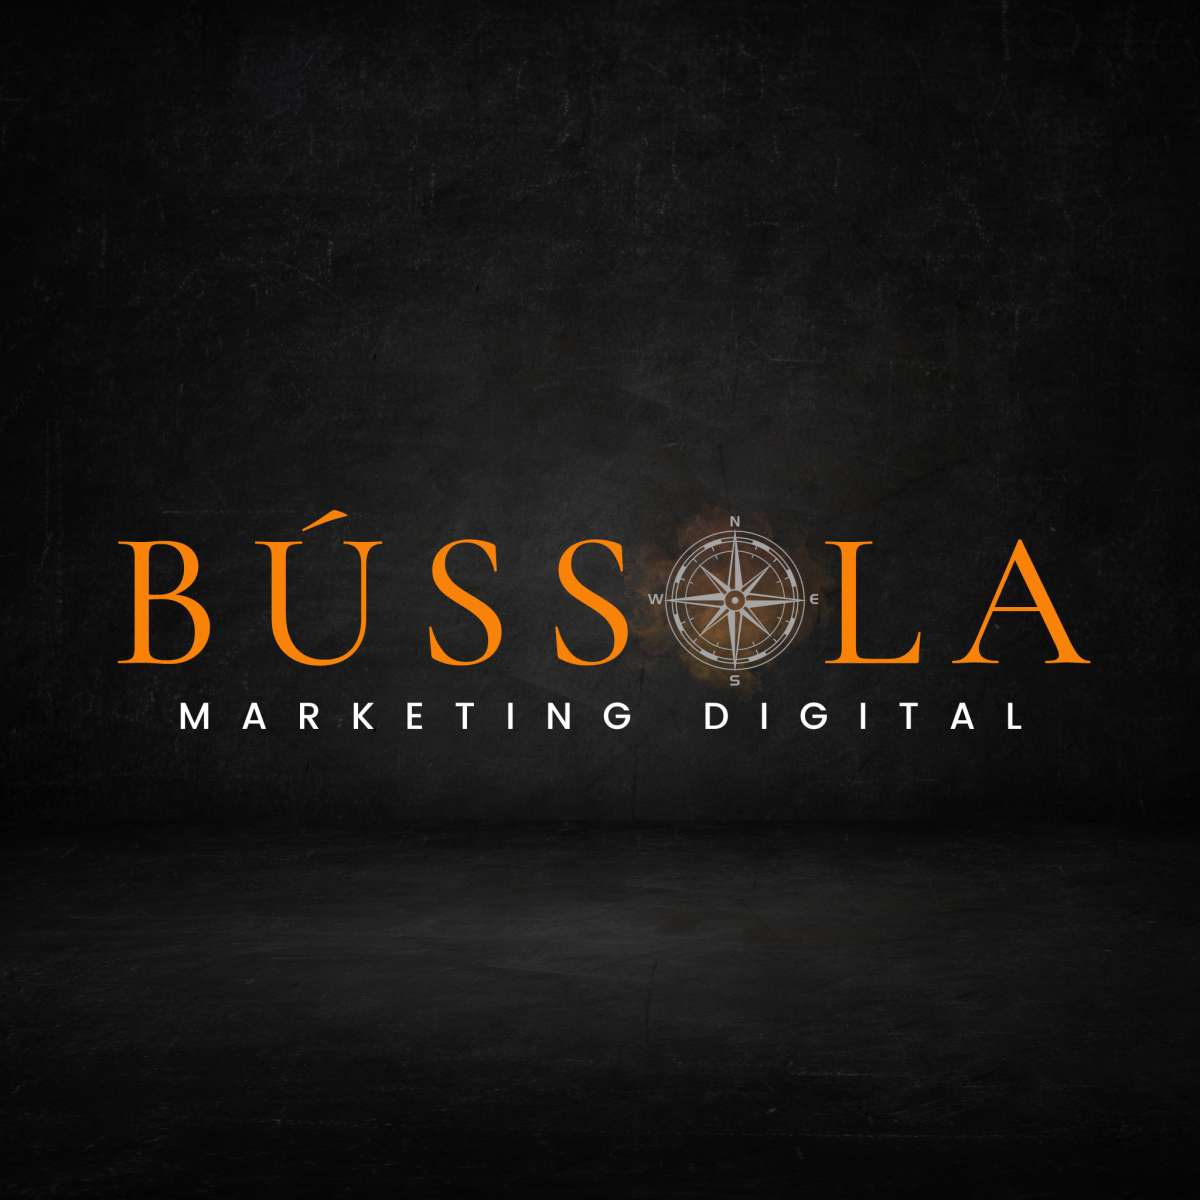 Bussóla Marketing Digital - Vila Real - Designer Gráfico